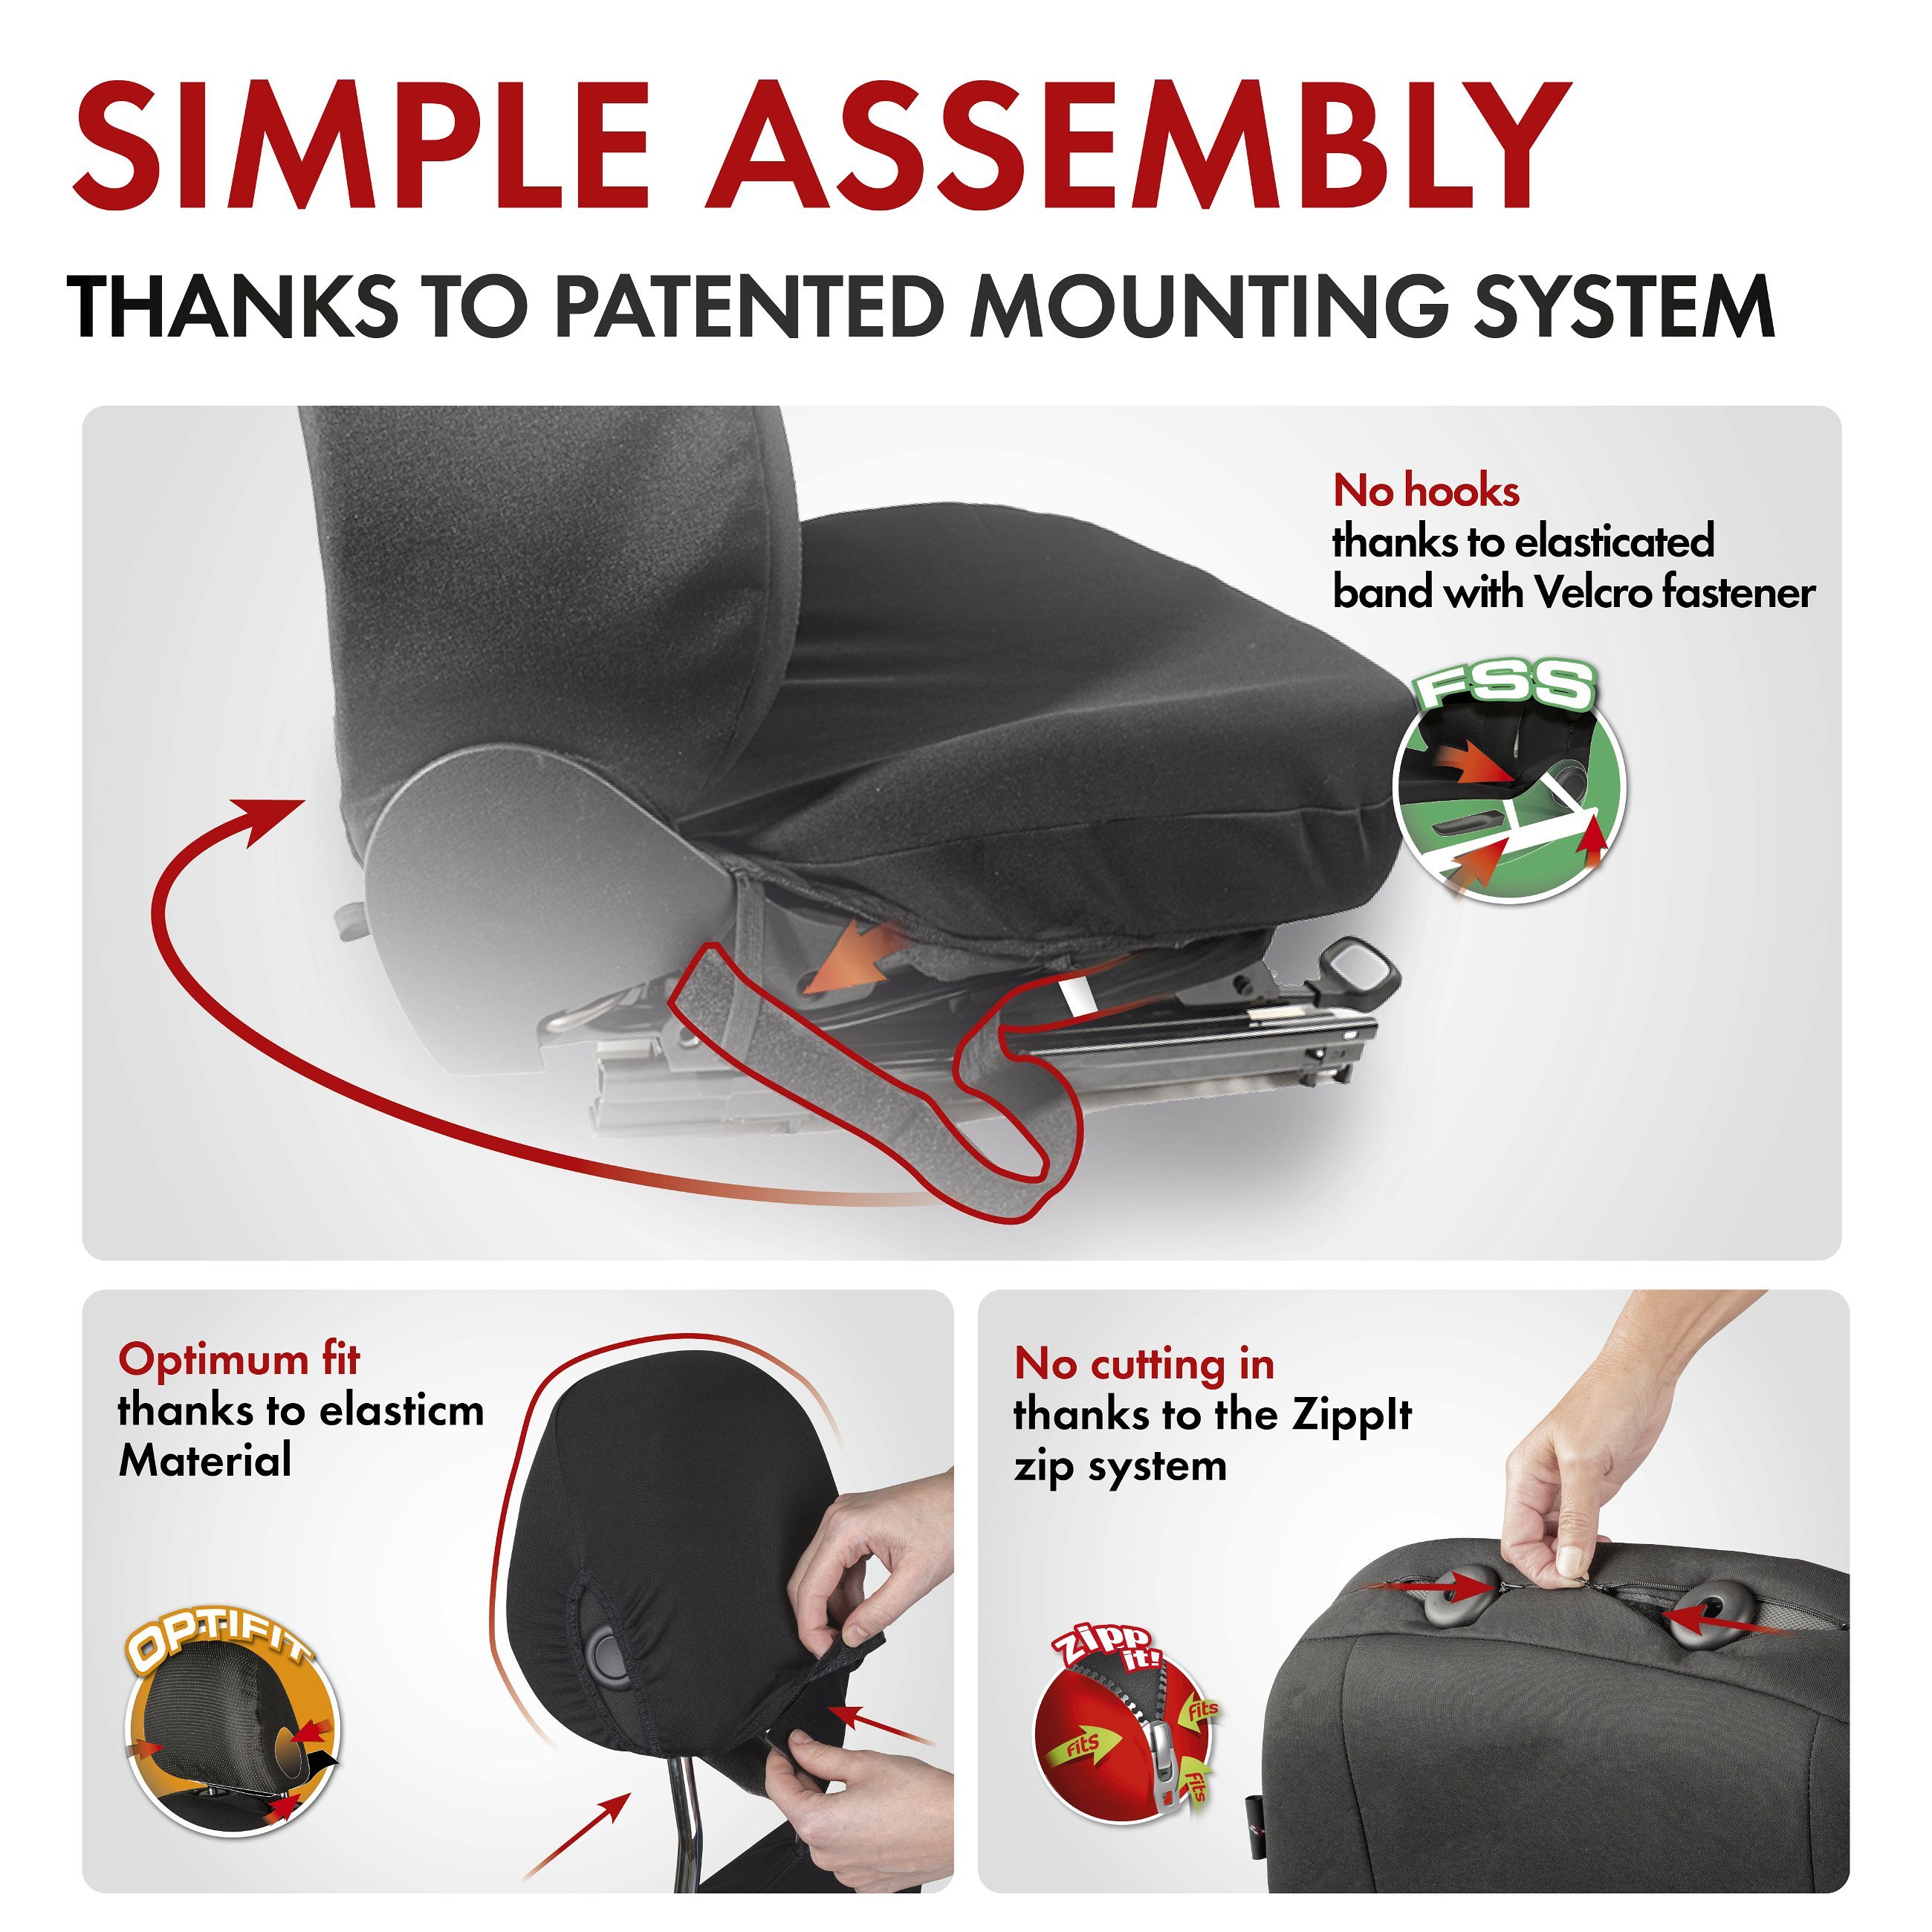 ZIPP IT Premium Car seat covers Logan complete set with zip-system black/silver